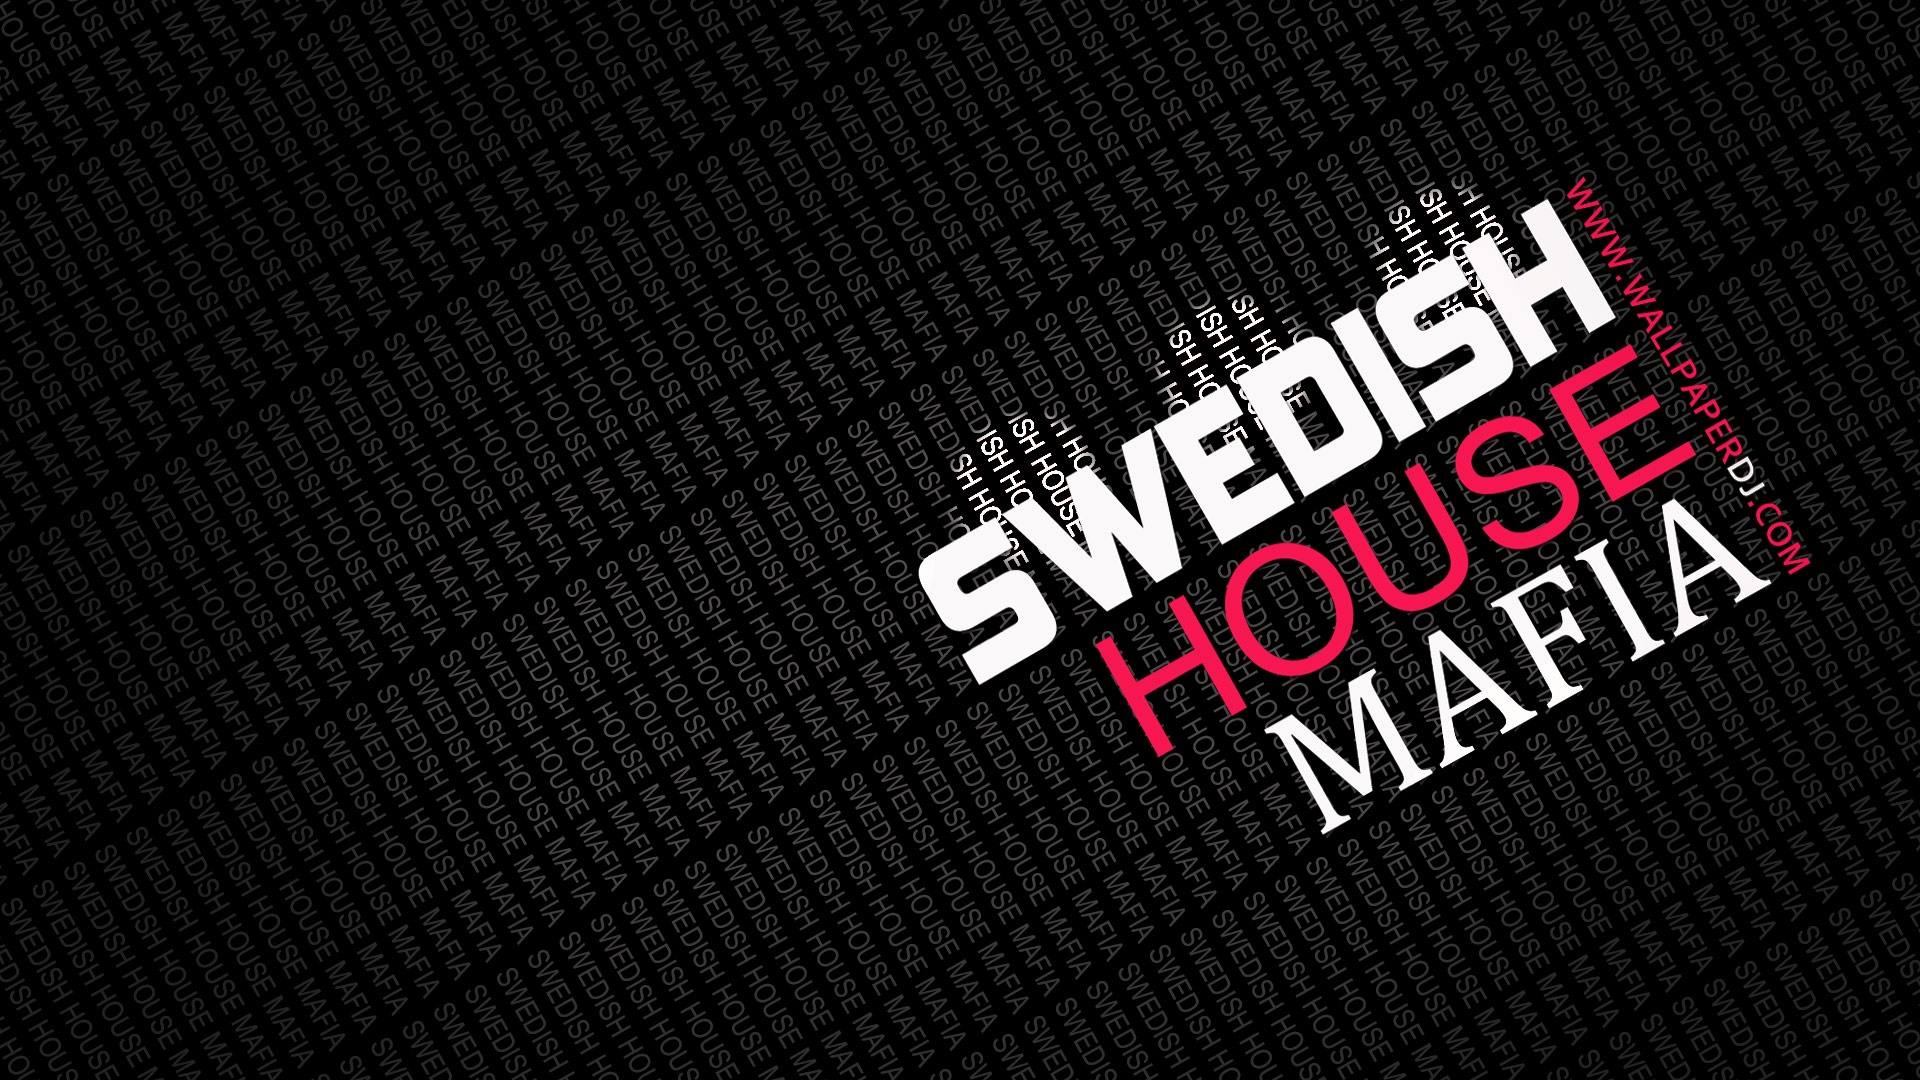 1920x1080 Swedish House Mafia wallpaper, music and dance ...